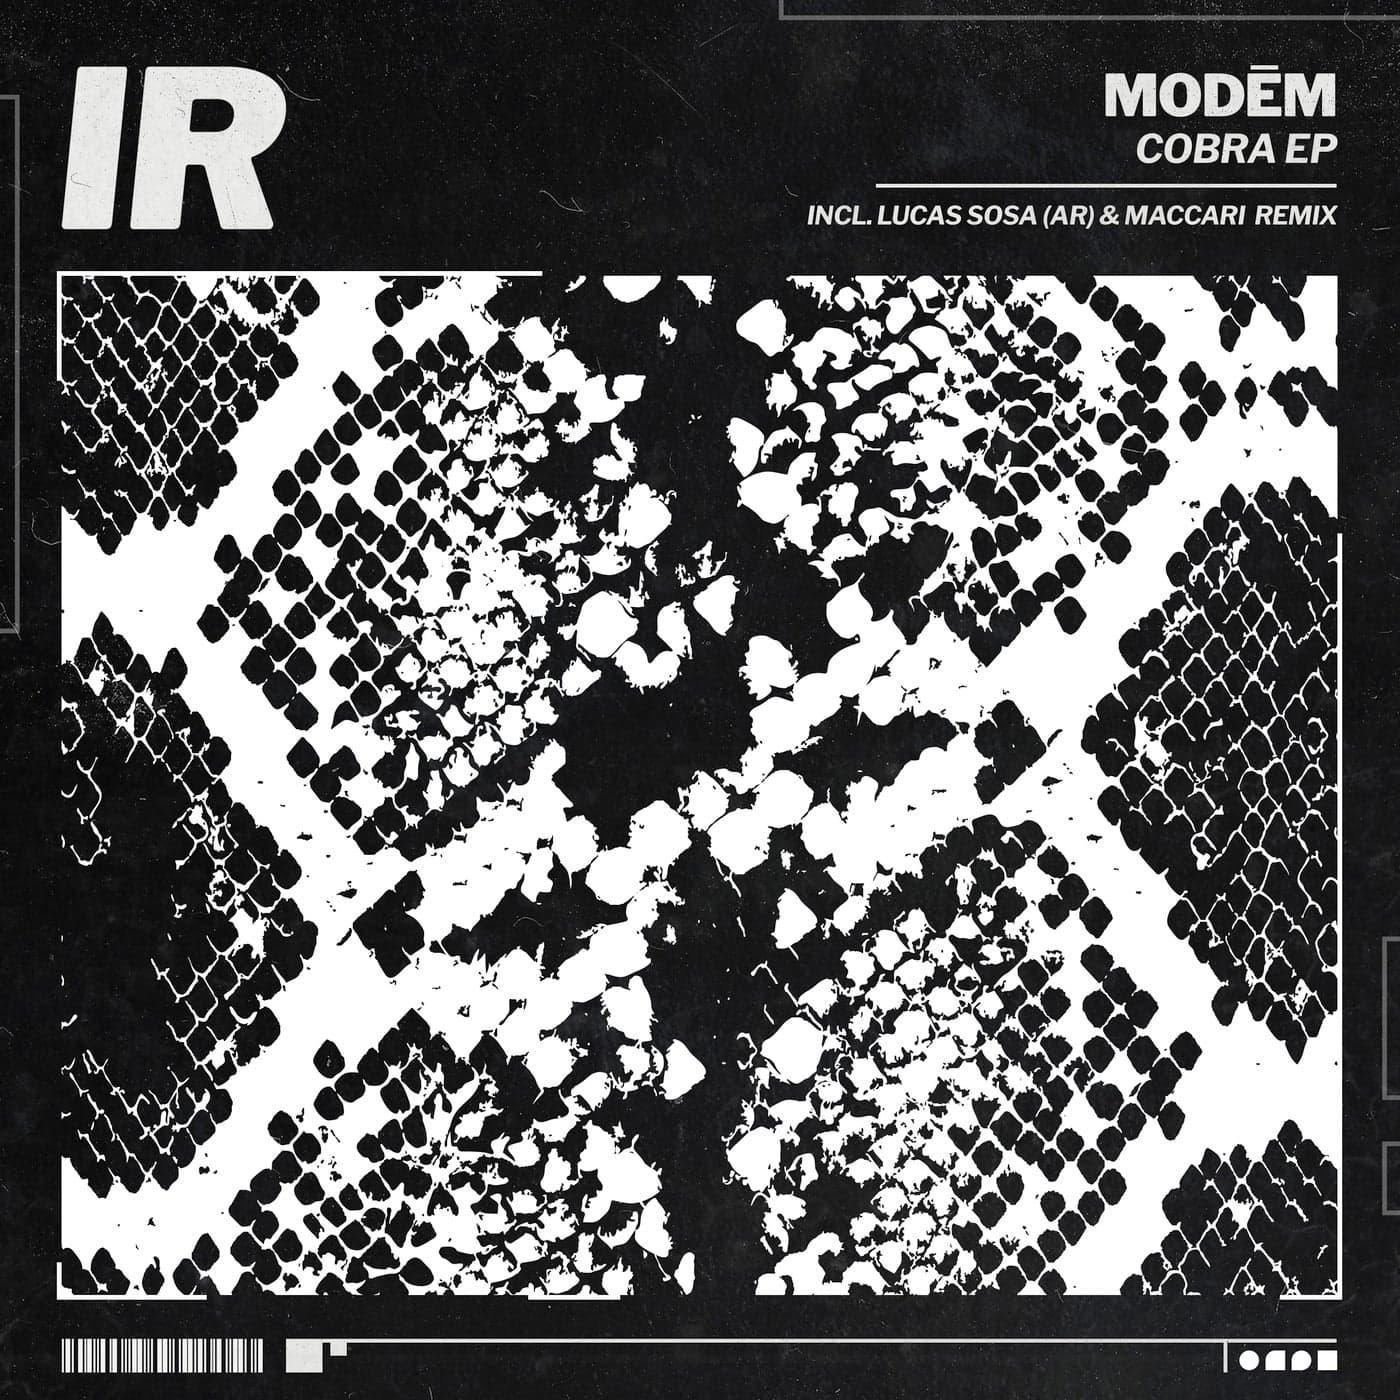 Download Modem - Cobra EP on Electrobuzz